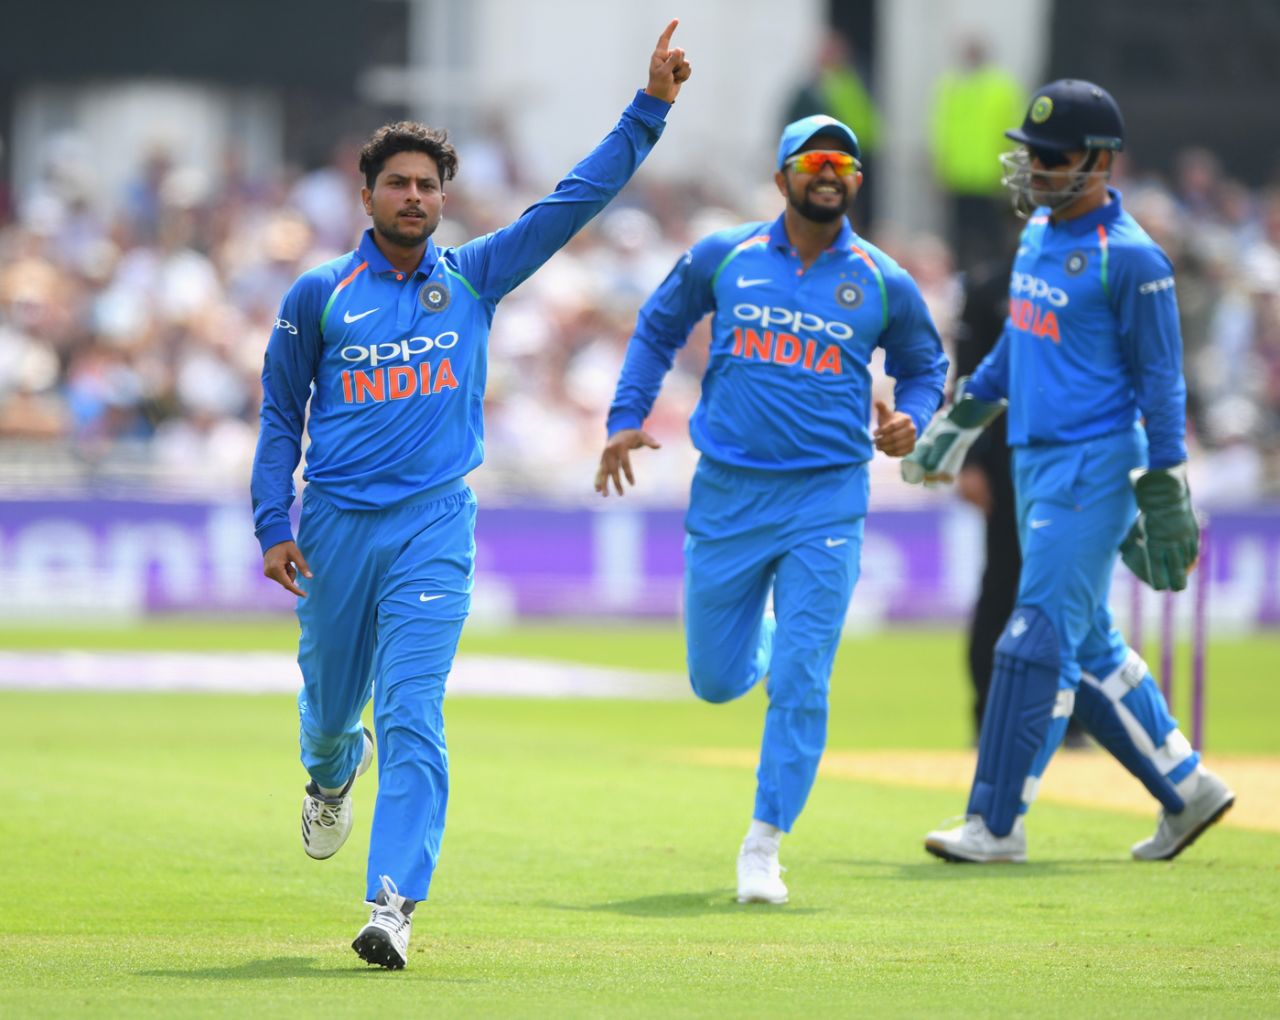 Kuldeep Yadav celebrates a wicket, England v India, 1st ODI, Nottingham, July 12, 2018